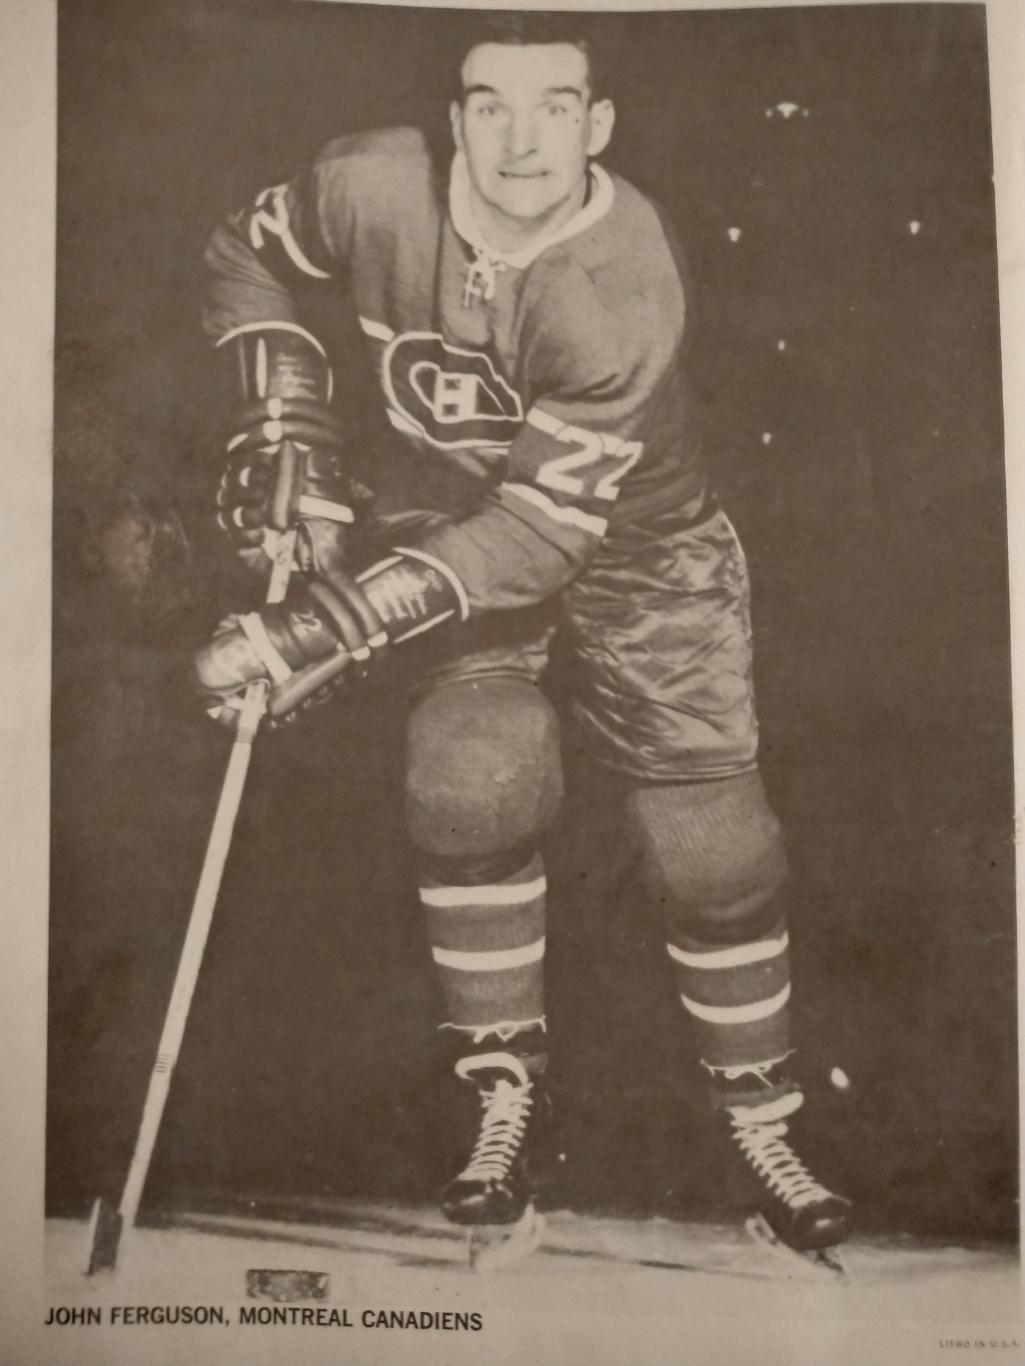 ХОККЕЙ СПРАВОЧНИК ЕЖЕГОДНИК НХЛ NHL WINTER 1970 HOCKEY GUIDE CORD SPORTFACKTS 7